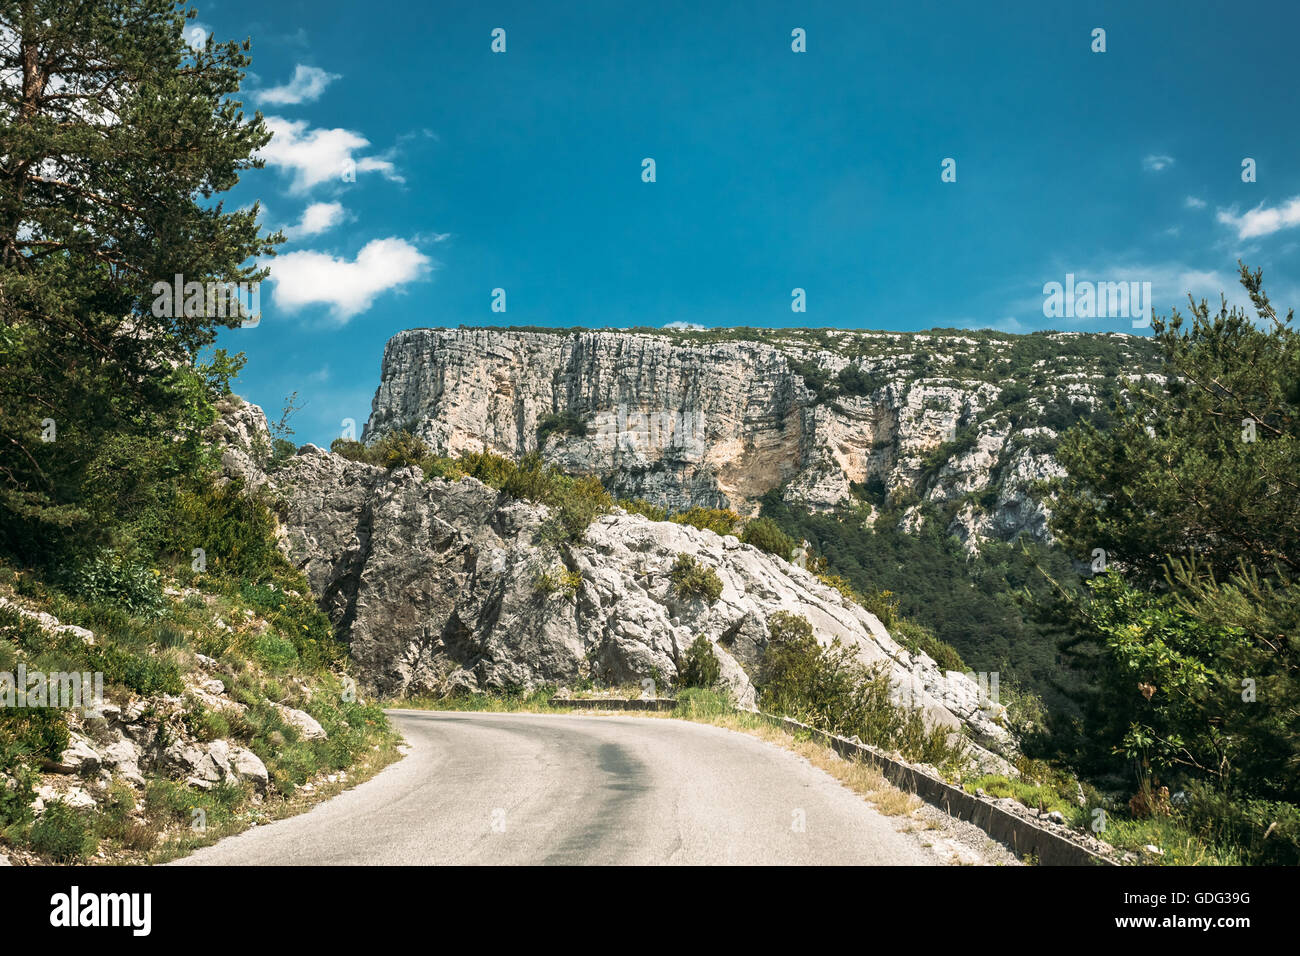 Beautiful Open Asphalt Mountain Road Under Sunny Blue Sky. Verdon Gorge In France. French Landscape Stock Photo